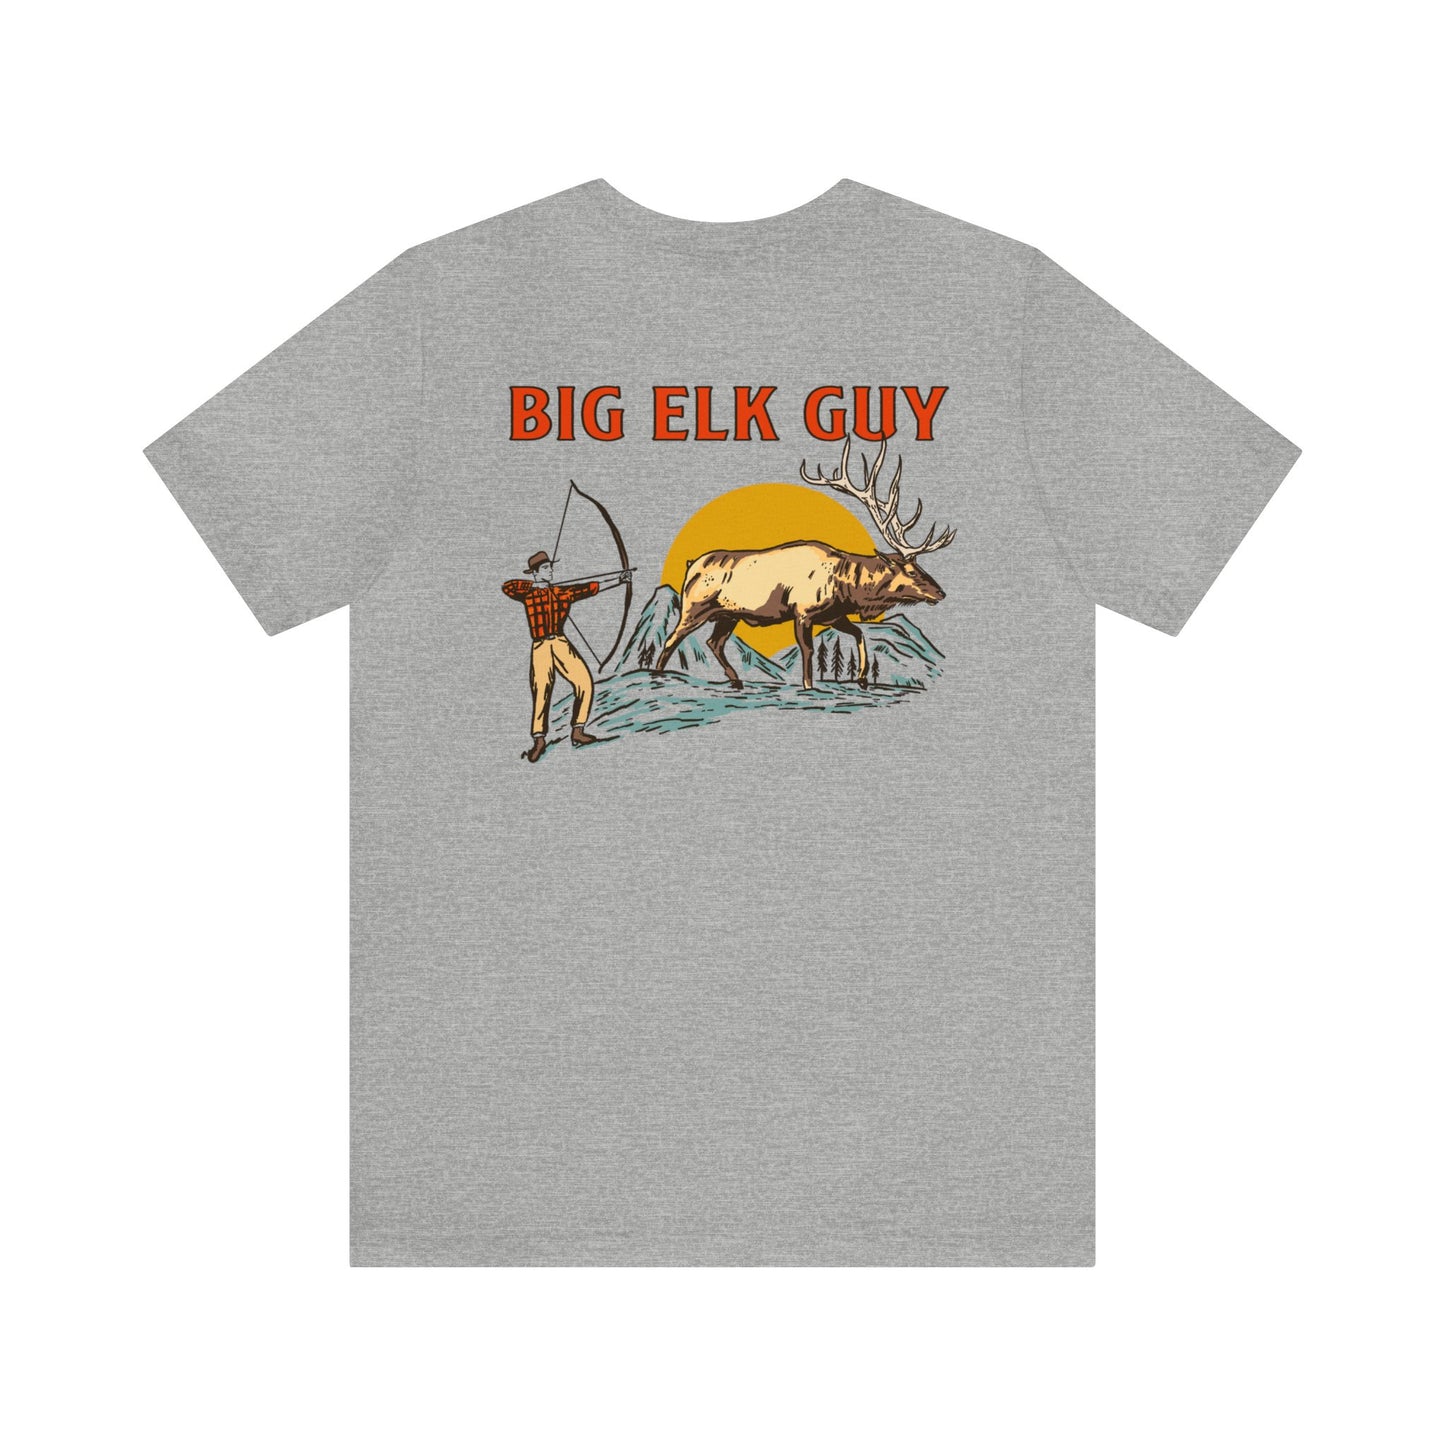 BIG ELK GUY DOUBLE SIDED T-SHIRT